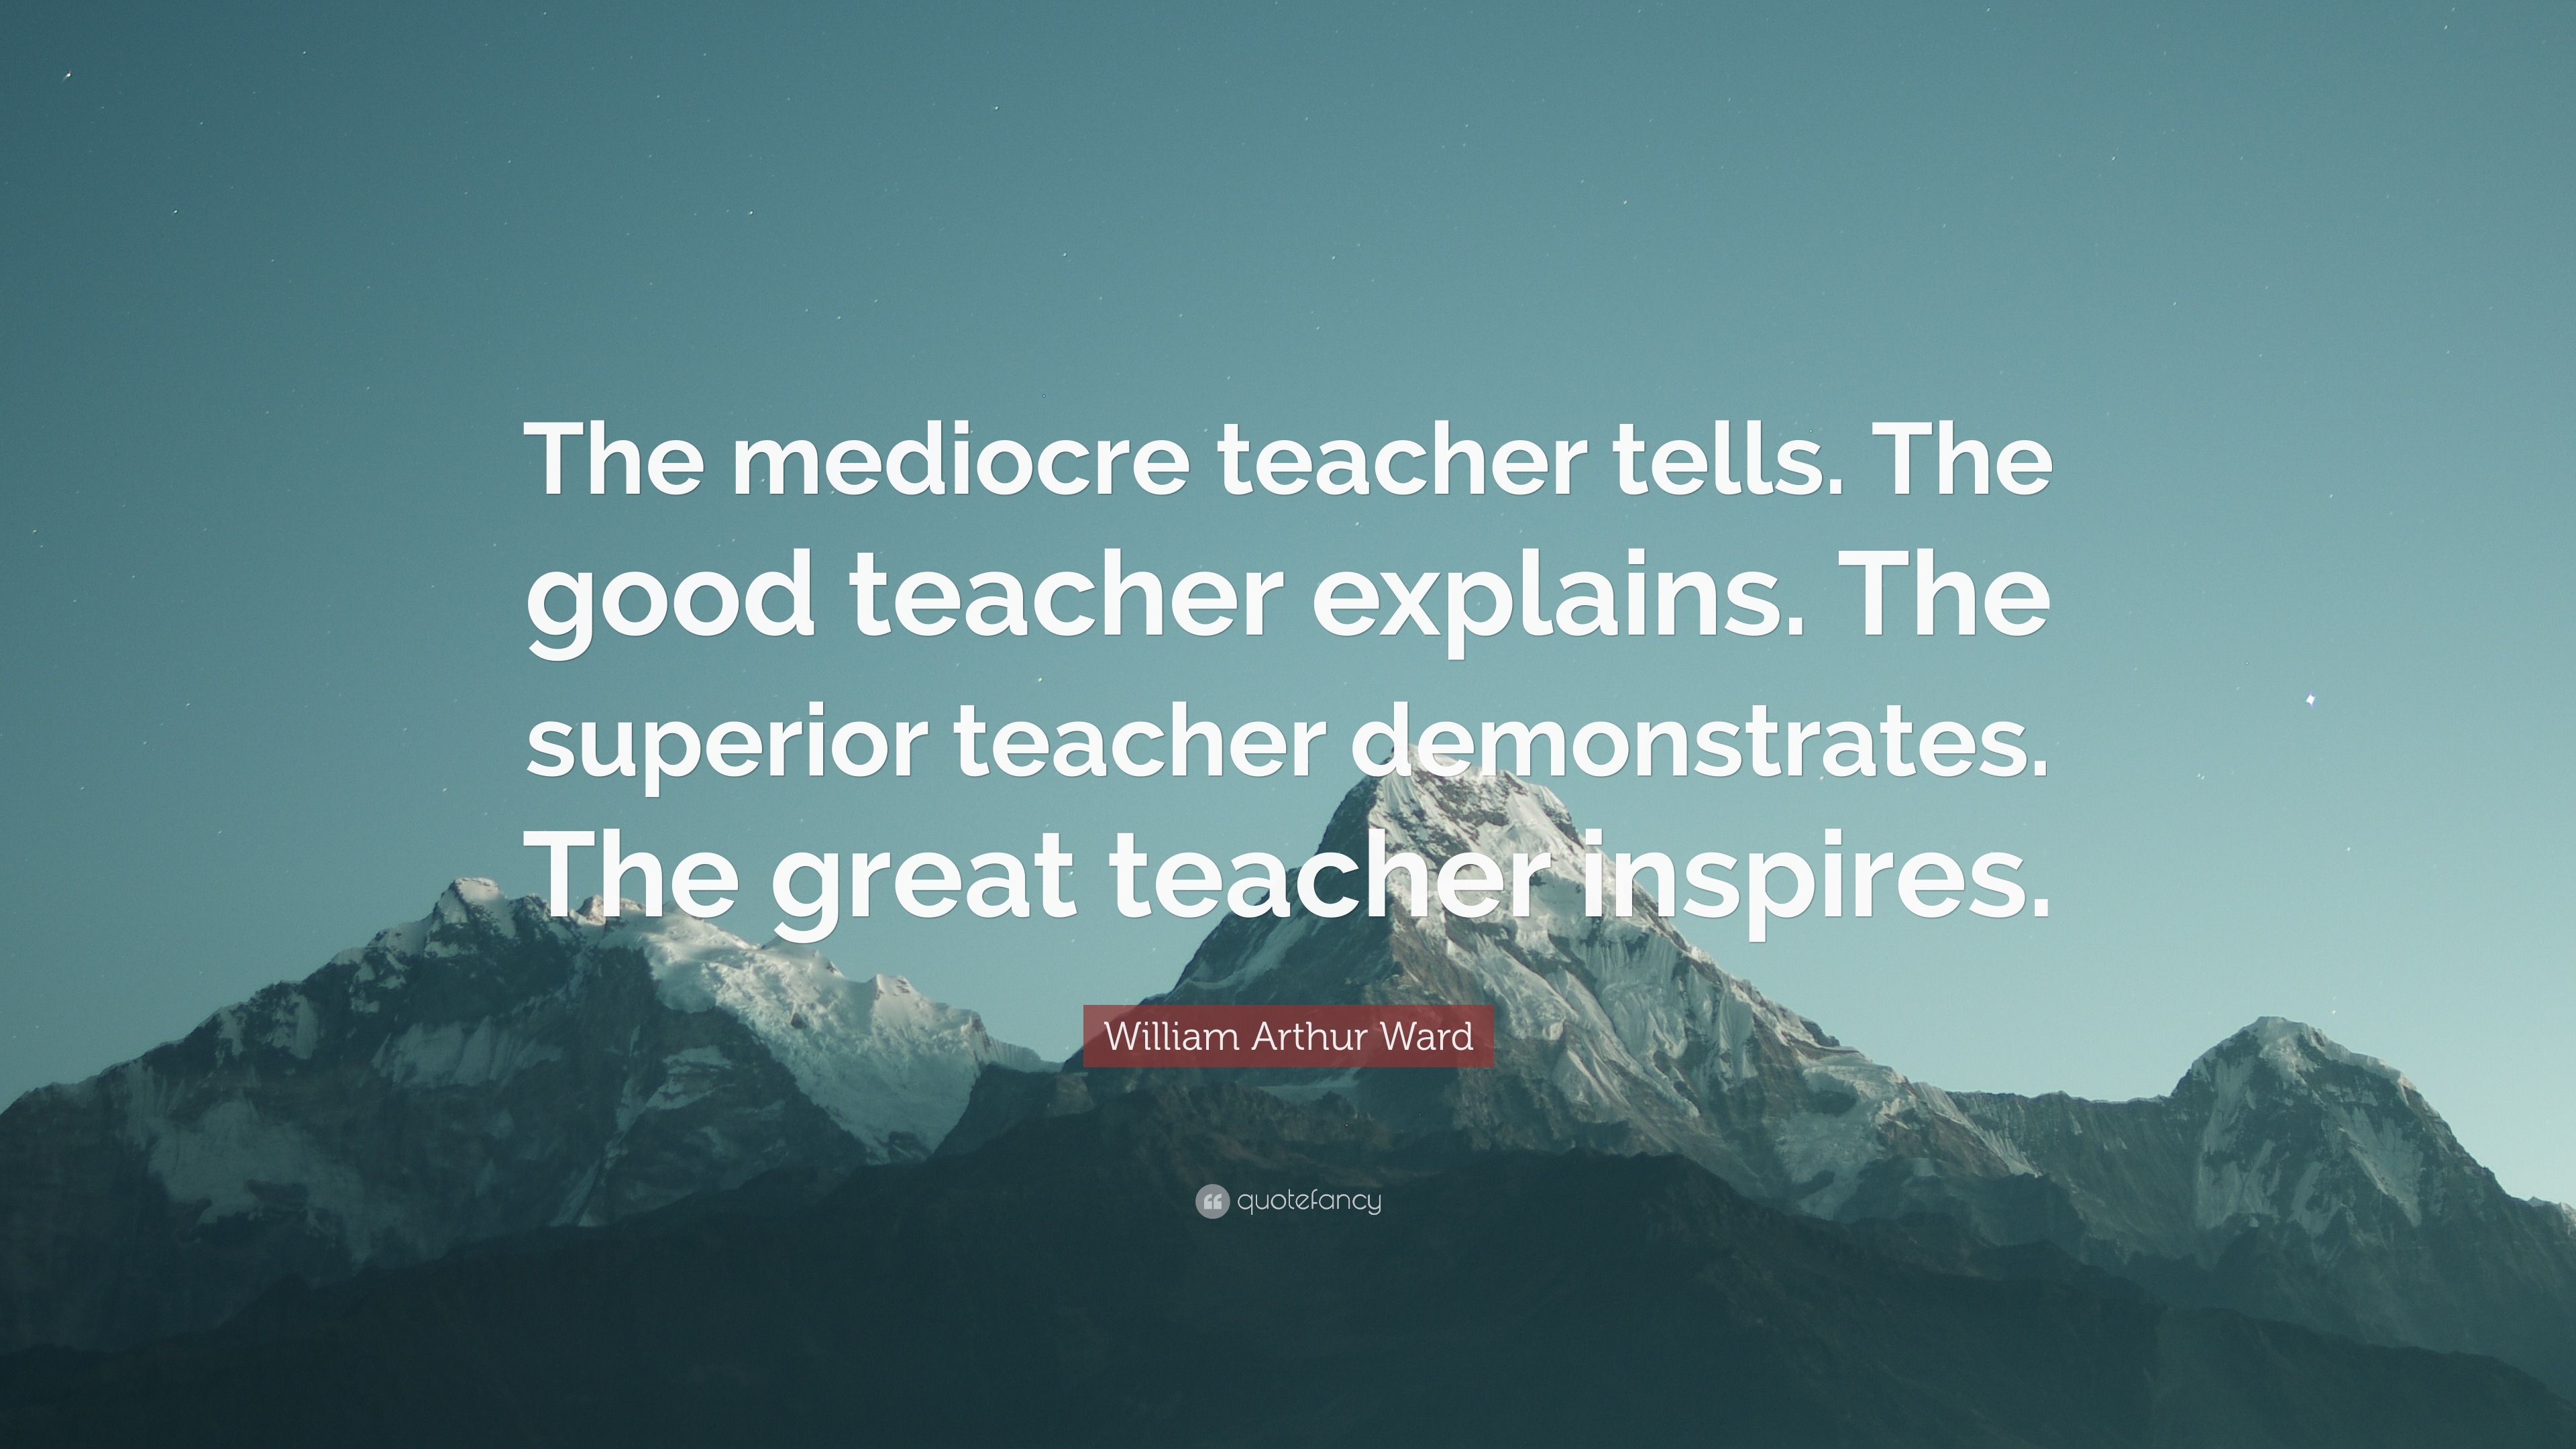 William Arthur Ward Quote: “The mediocre teacher tells. The good ...